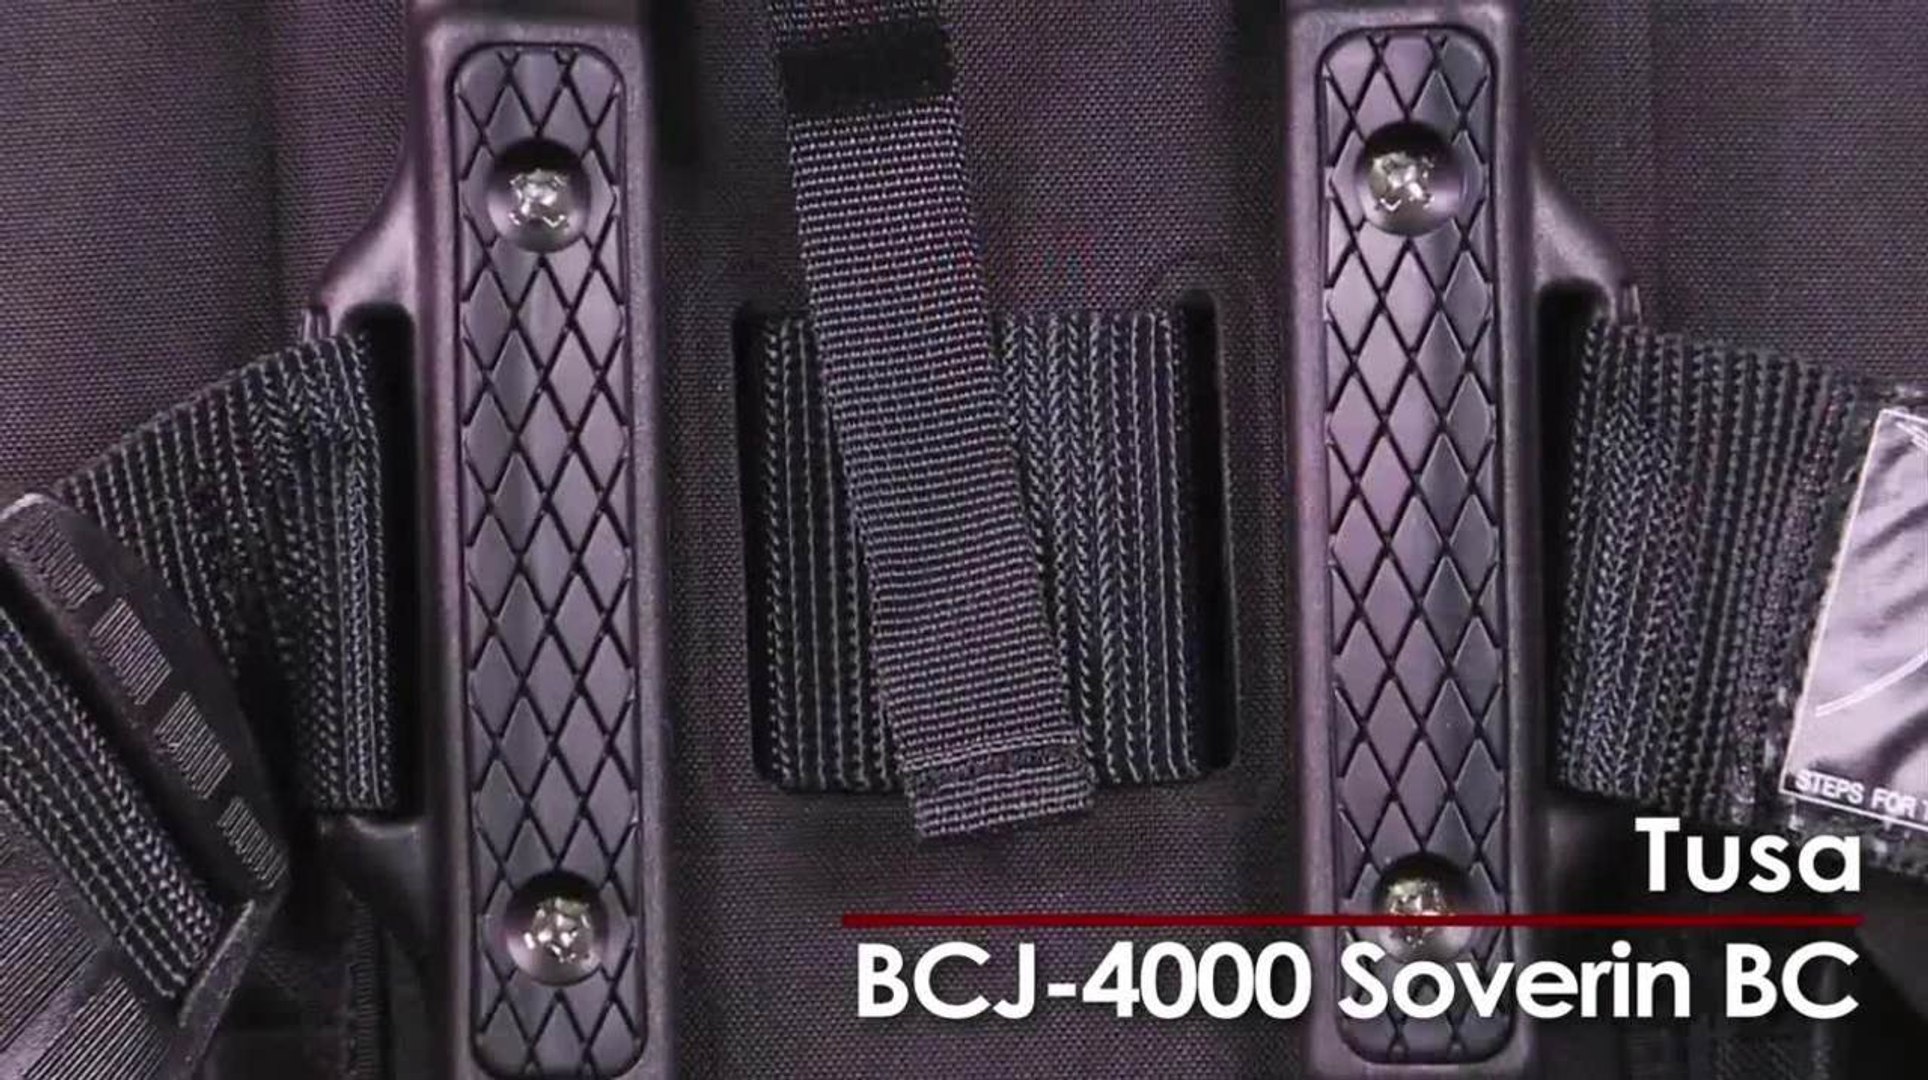 60:Second ScubaLab - TUSA BCJ-4000 Soverin BC